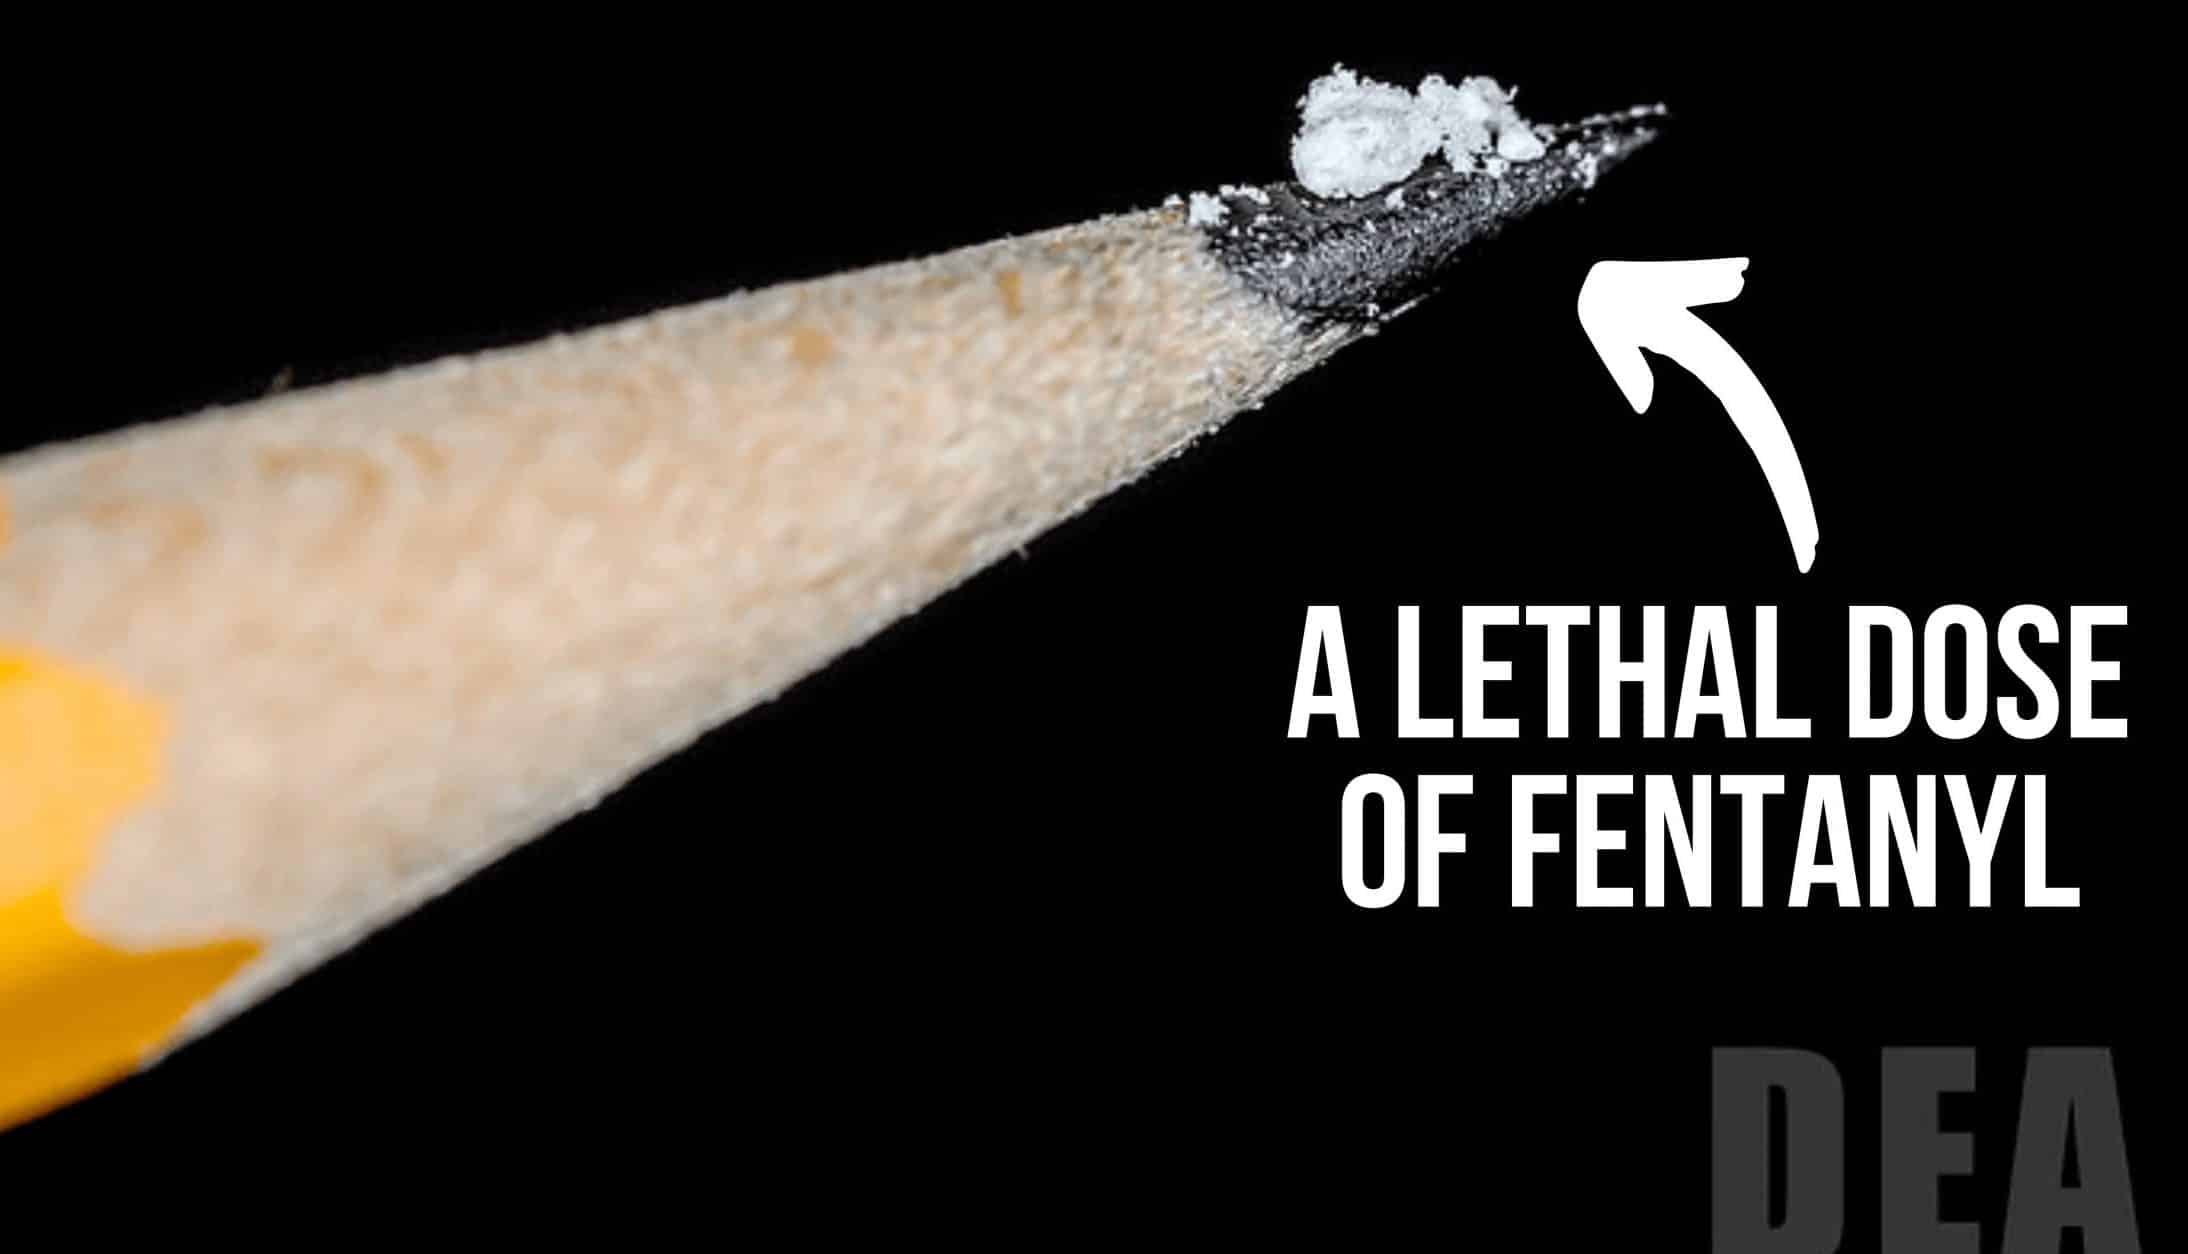 Why Is Fentanyl So Dangerous?